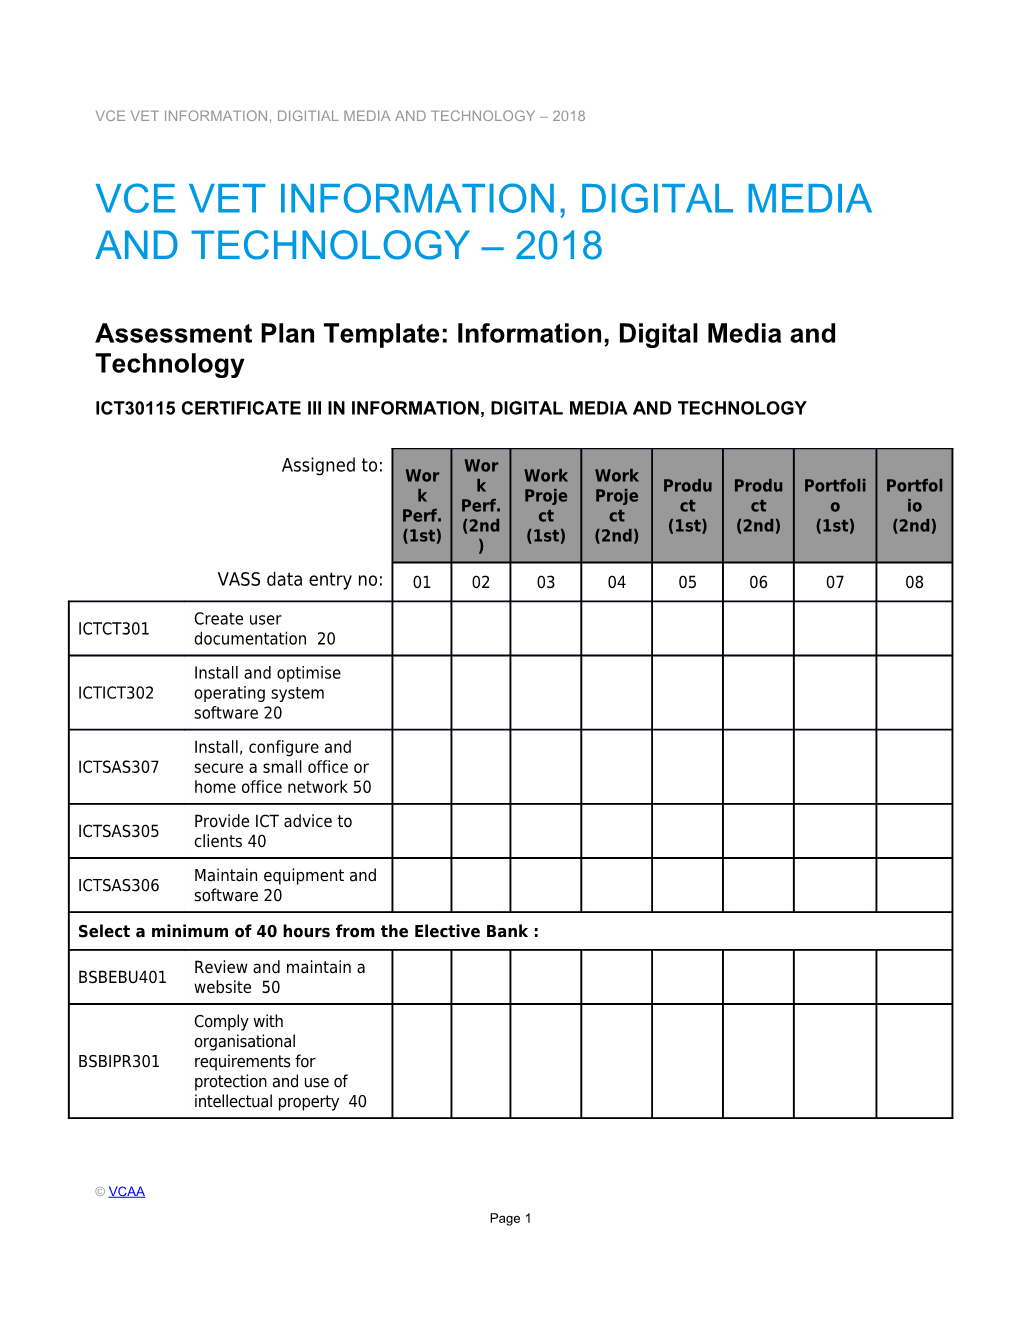 VCE VET; Information, Digital Media and Technology - Assessment Plan - Template and Sample